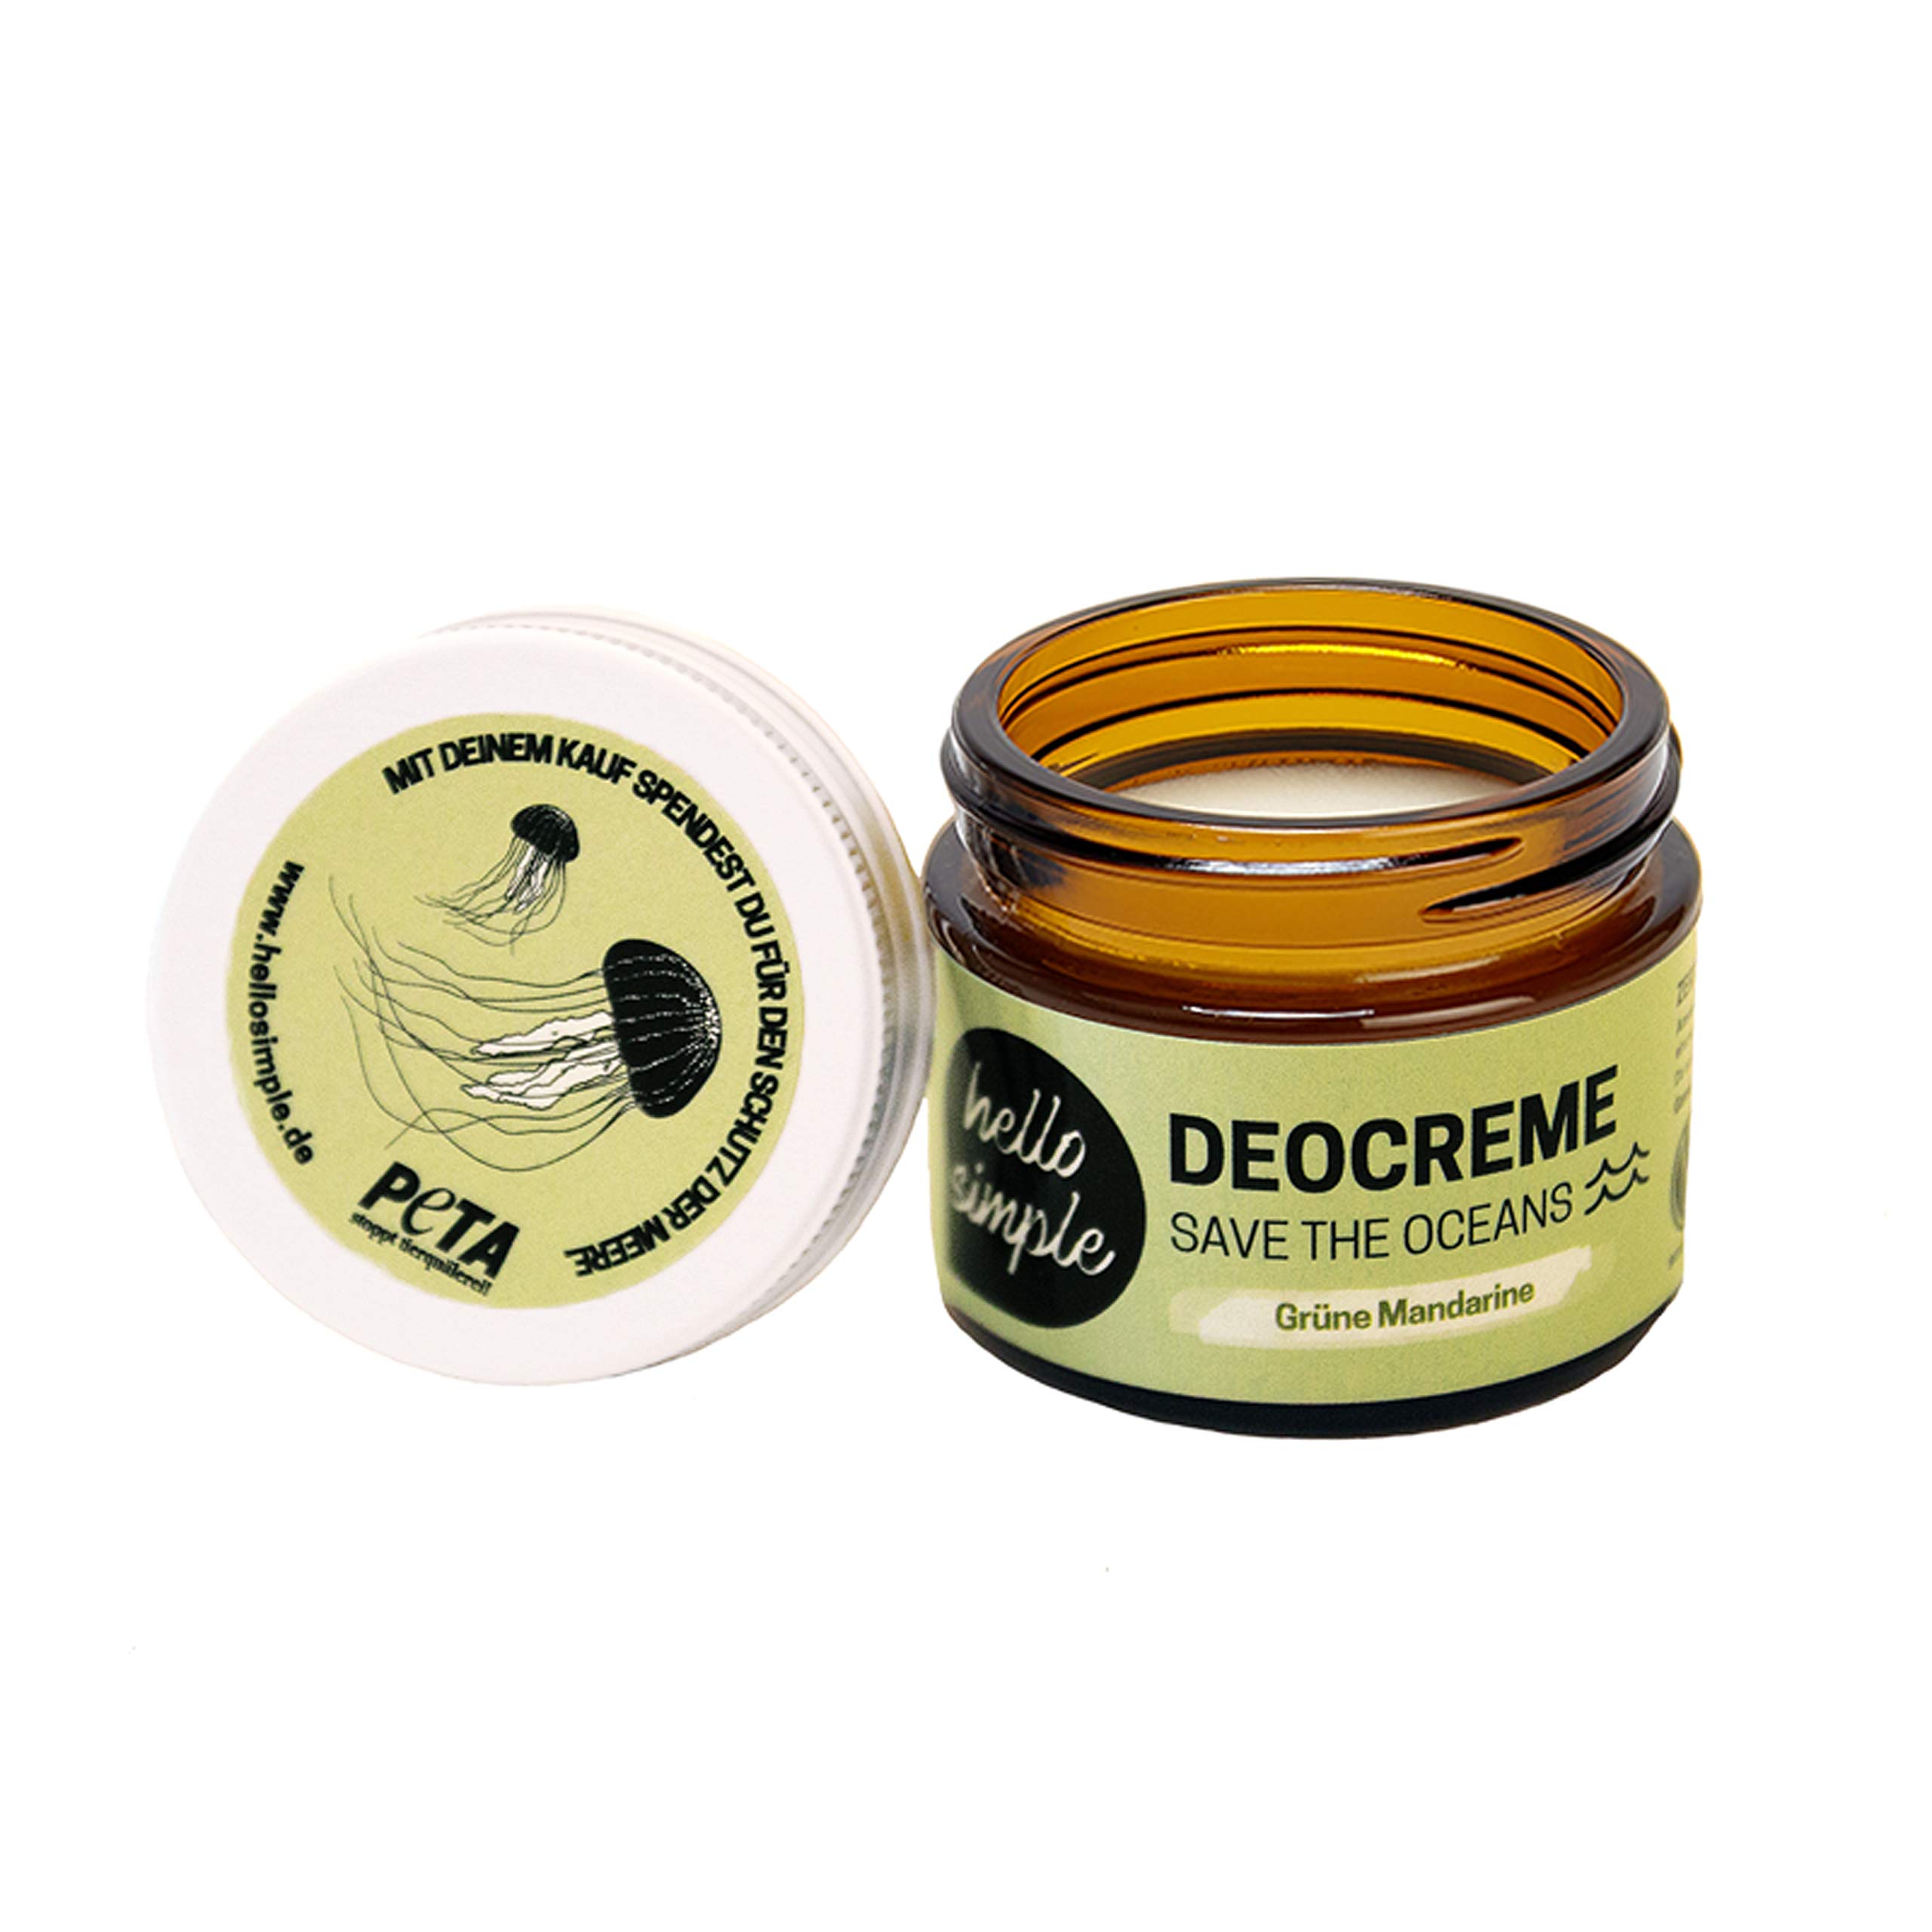 hello simple - Deocreme Deodorant Deo Creme (50 g) - SAVE THE OCEANS! - nachhaltige und zertifizierte Naturkosmetik - Deo Frauen Männer - ohne Aluminium, vegan, bio, plastikfrei(Grüne Mandarine)